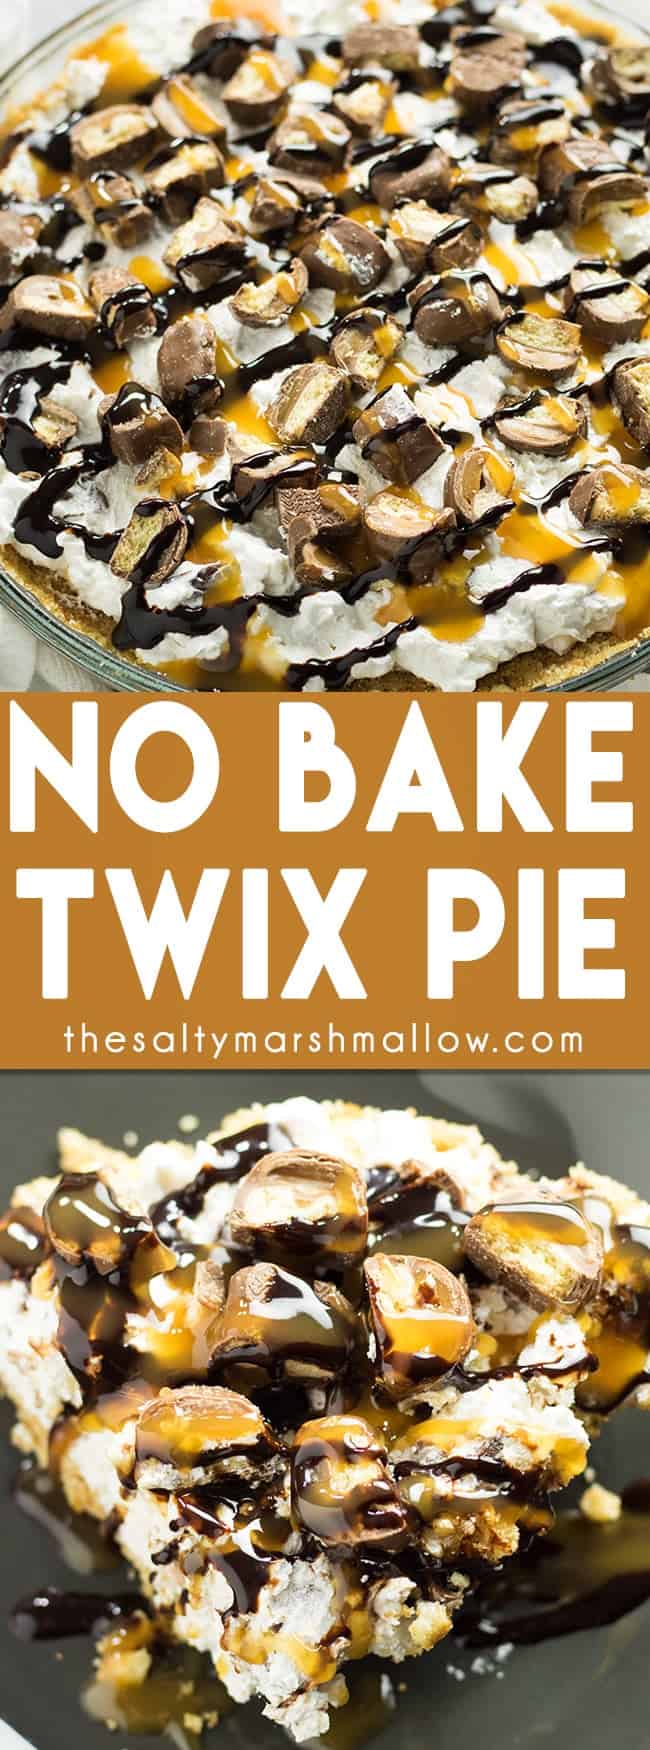 No Bake Twix Pie - The Salty Marshmallow